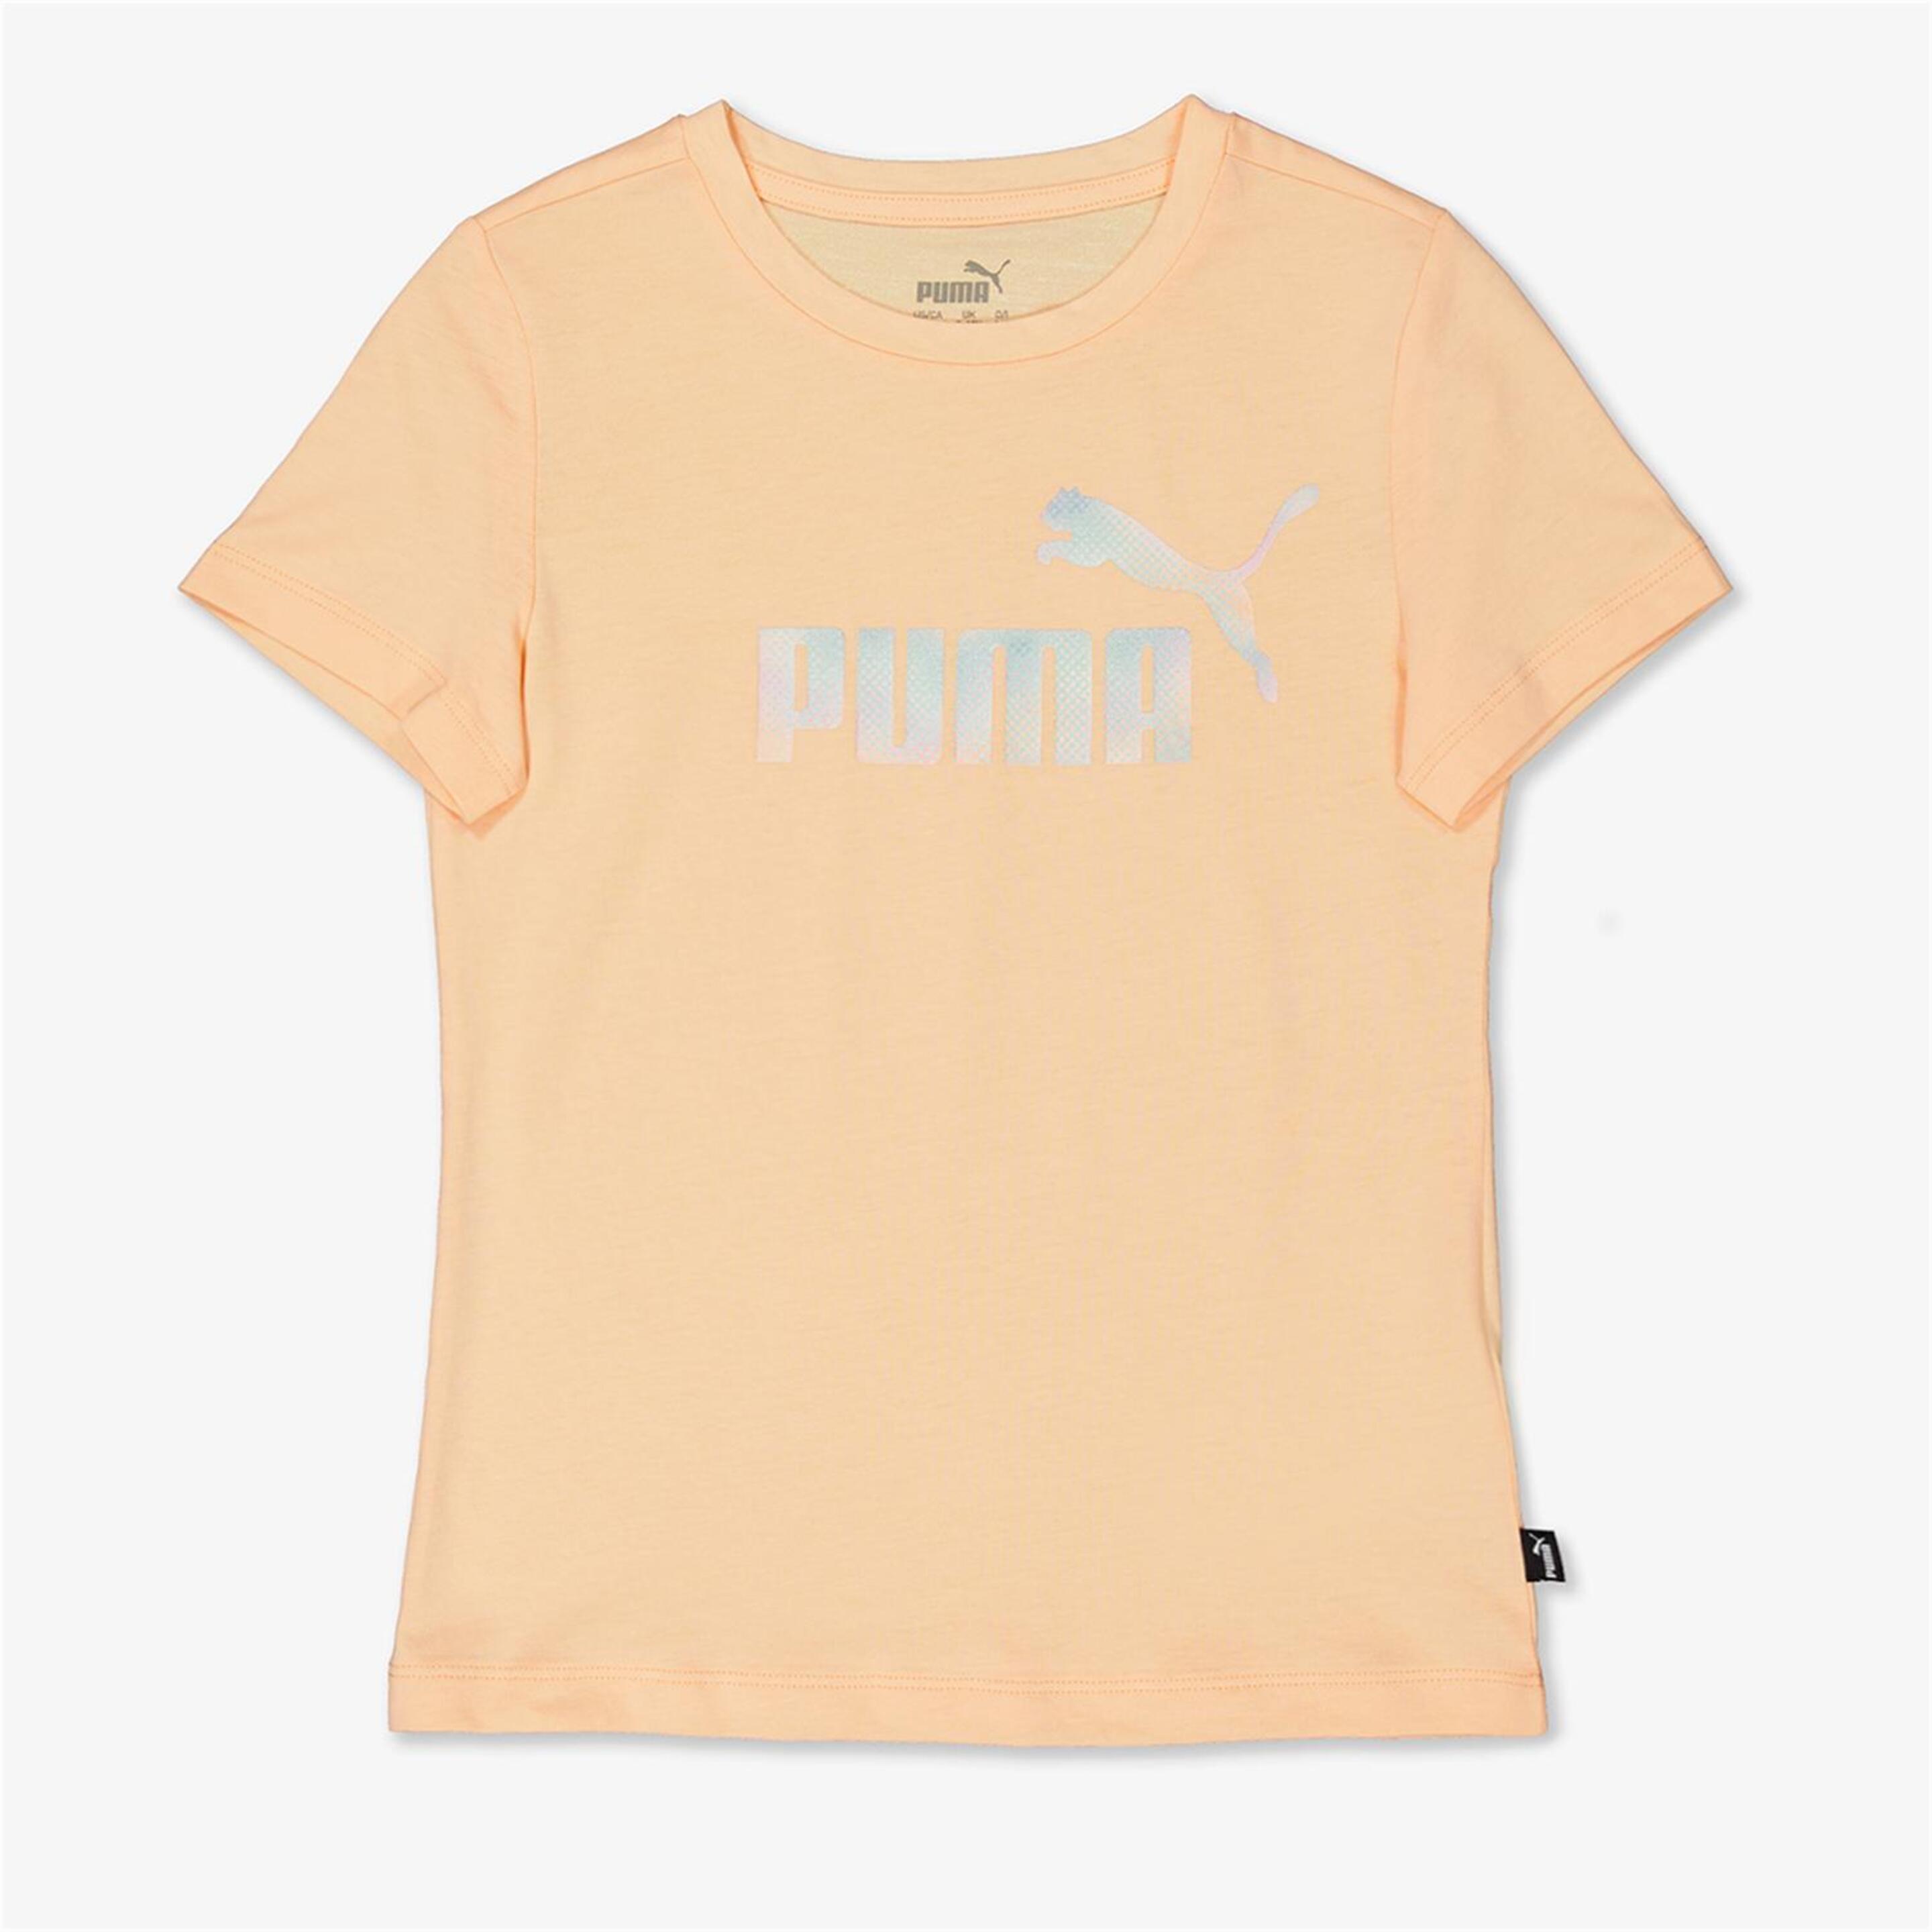 Camiseta Puma - naranja - Camiseta Niña